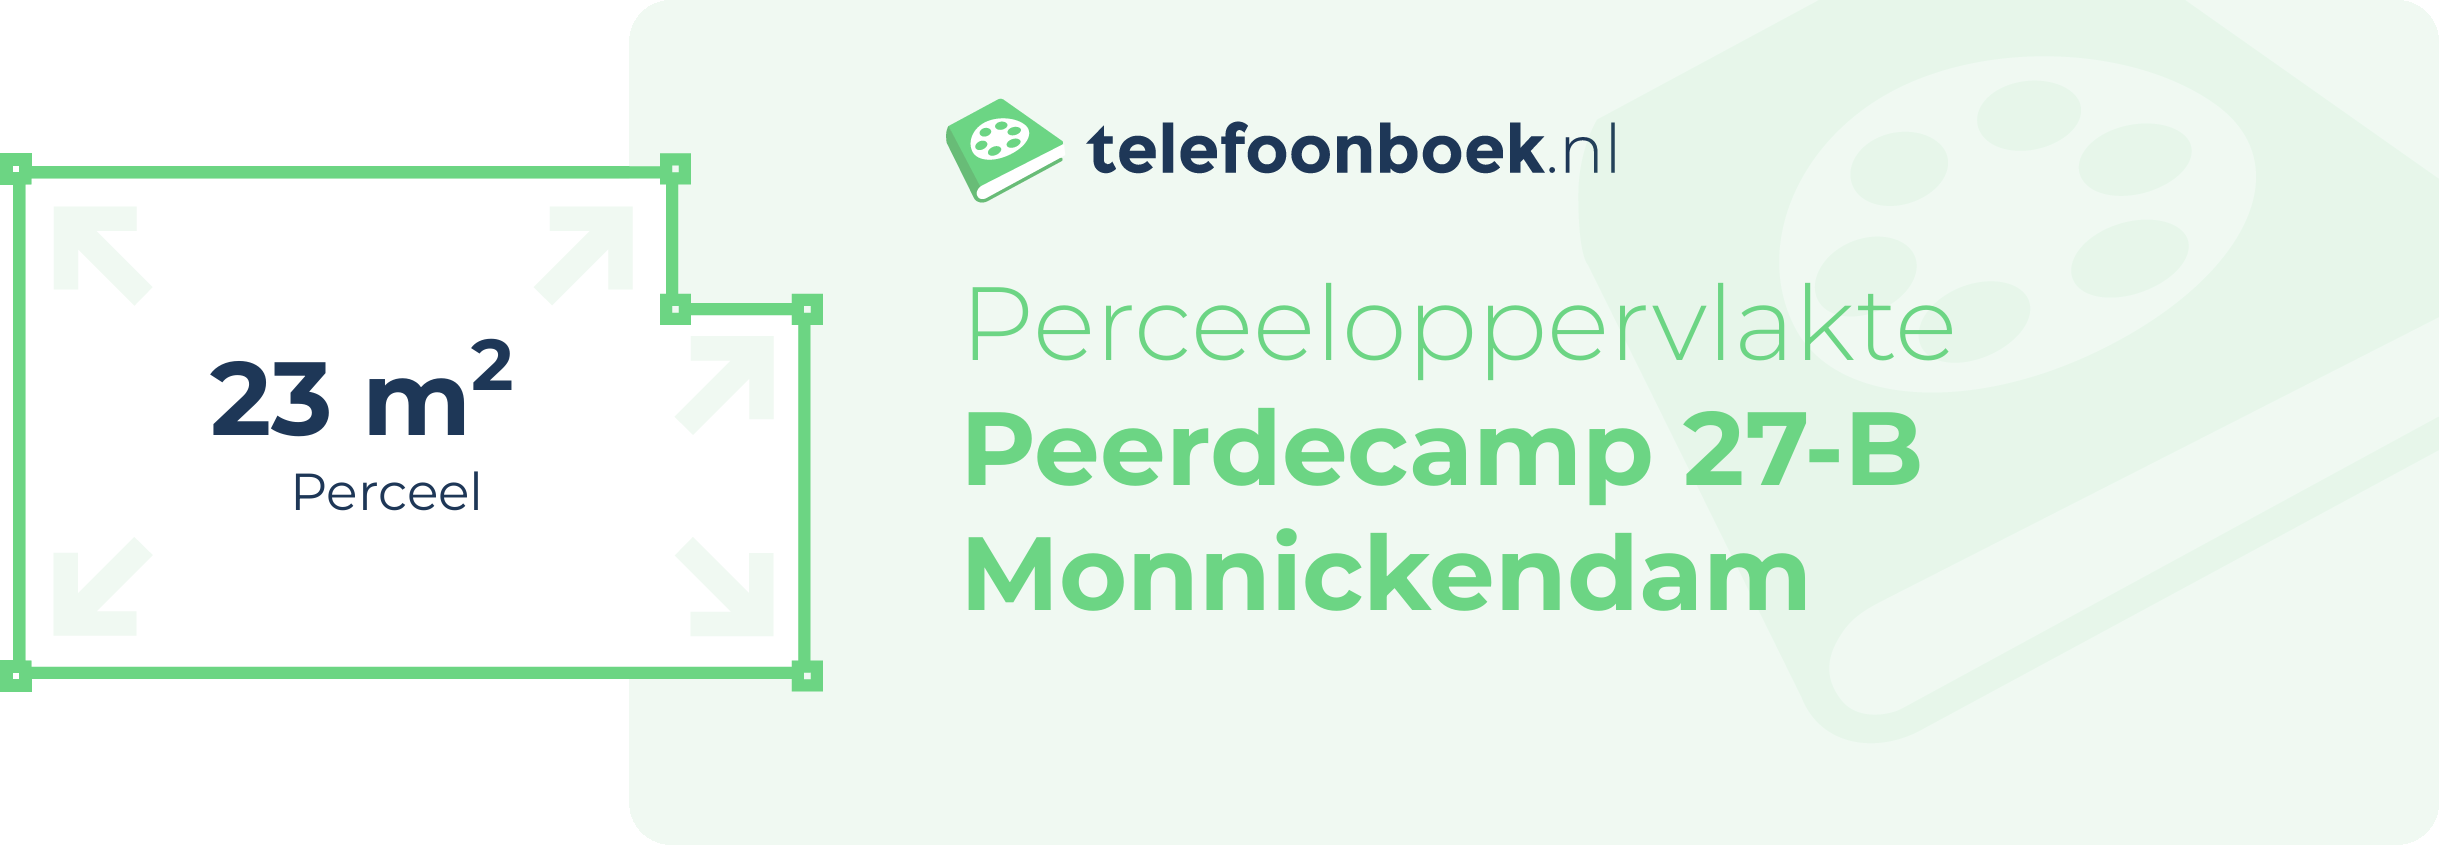 Perceeloppervlakte Peerdecamp 27-B Monnickendam